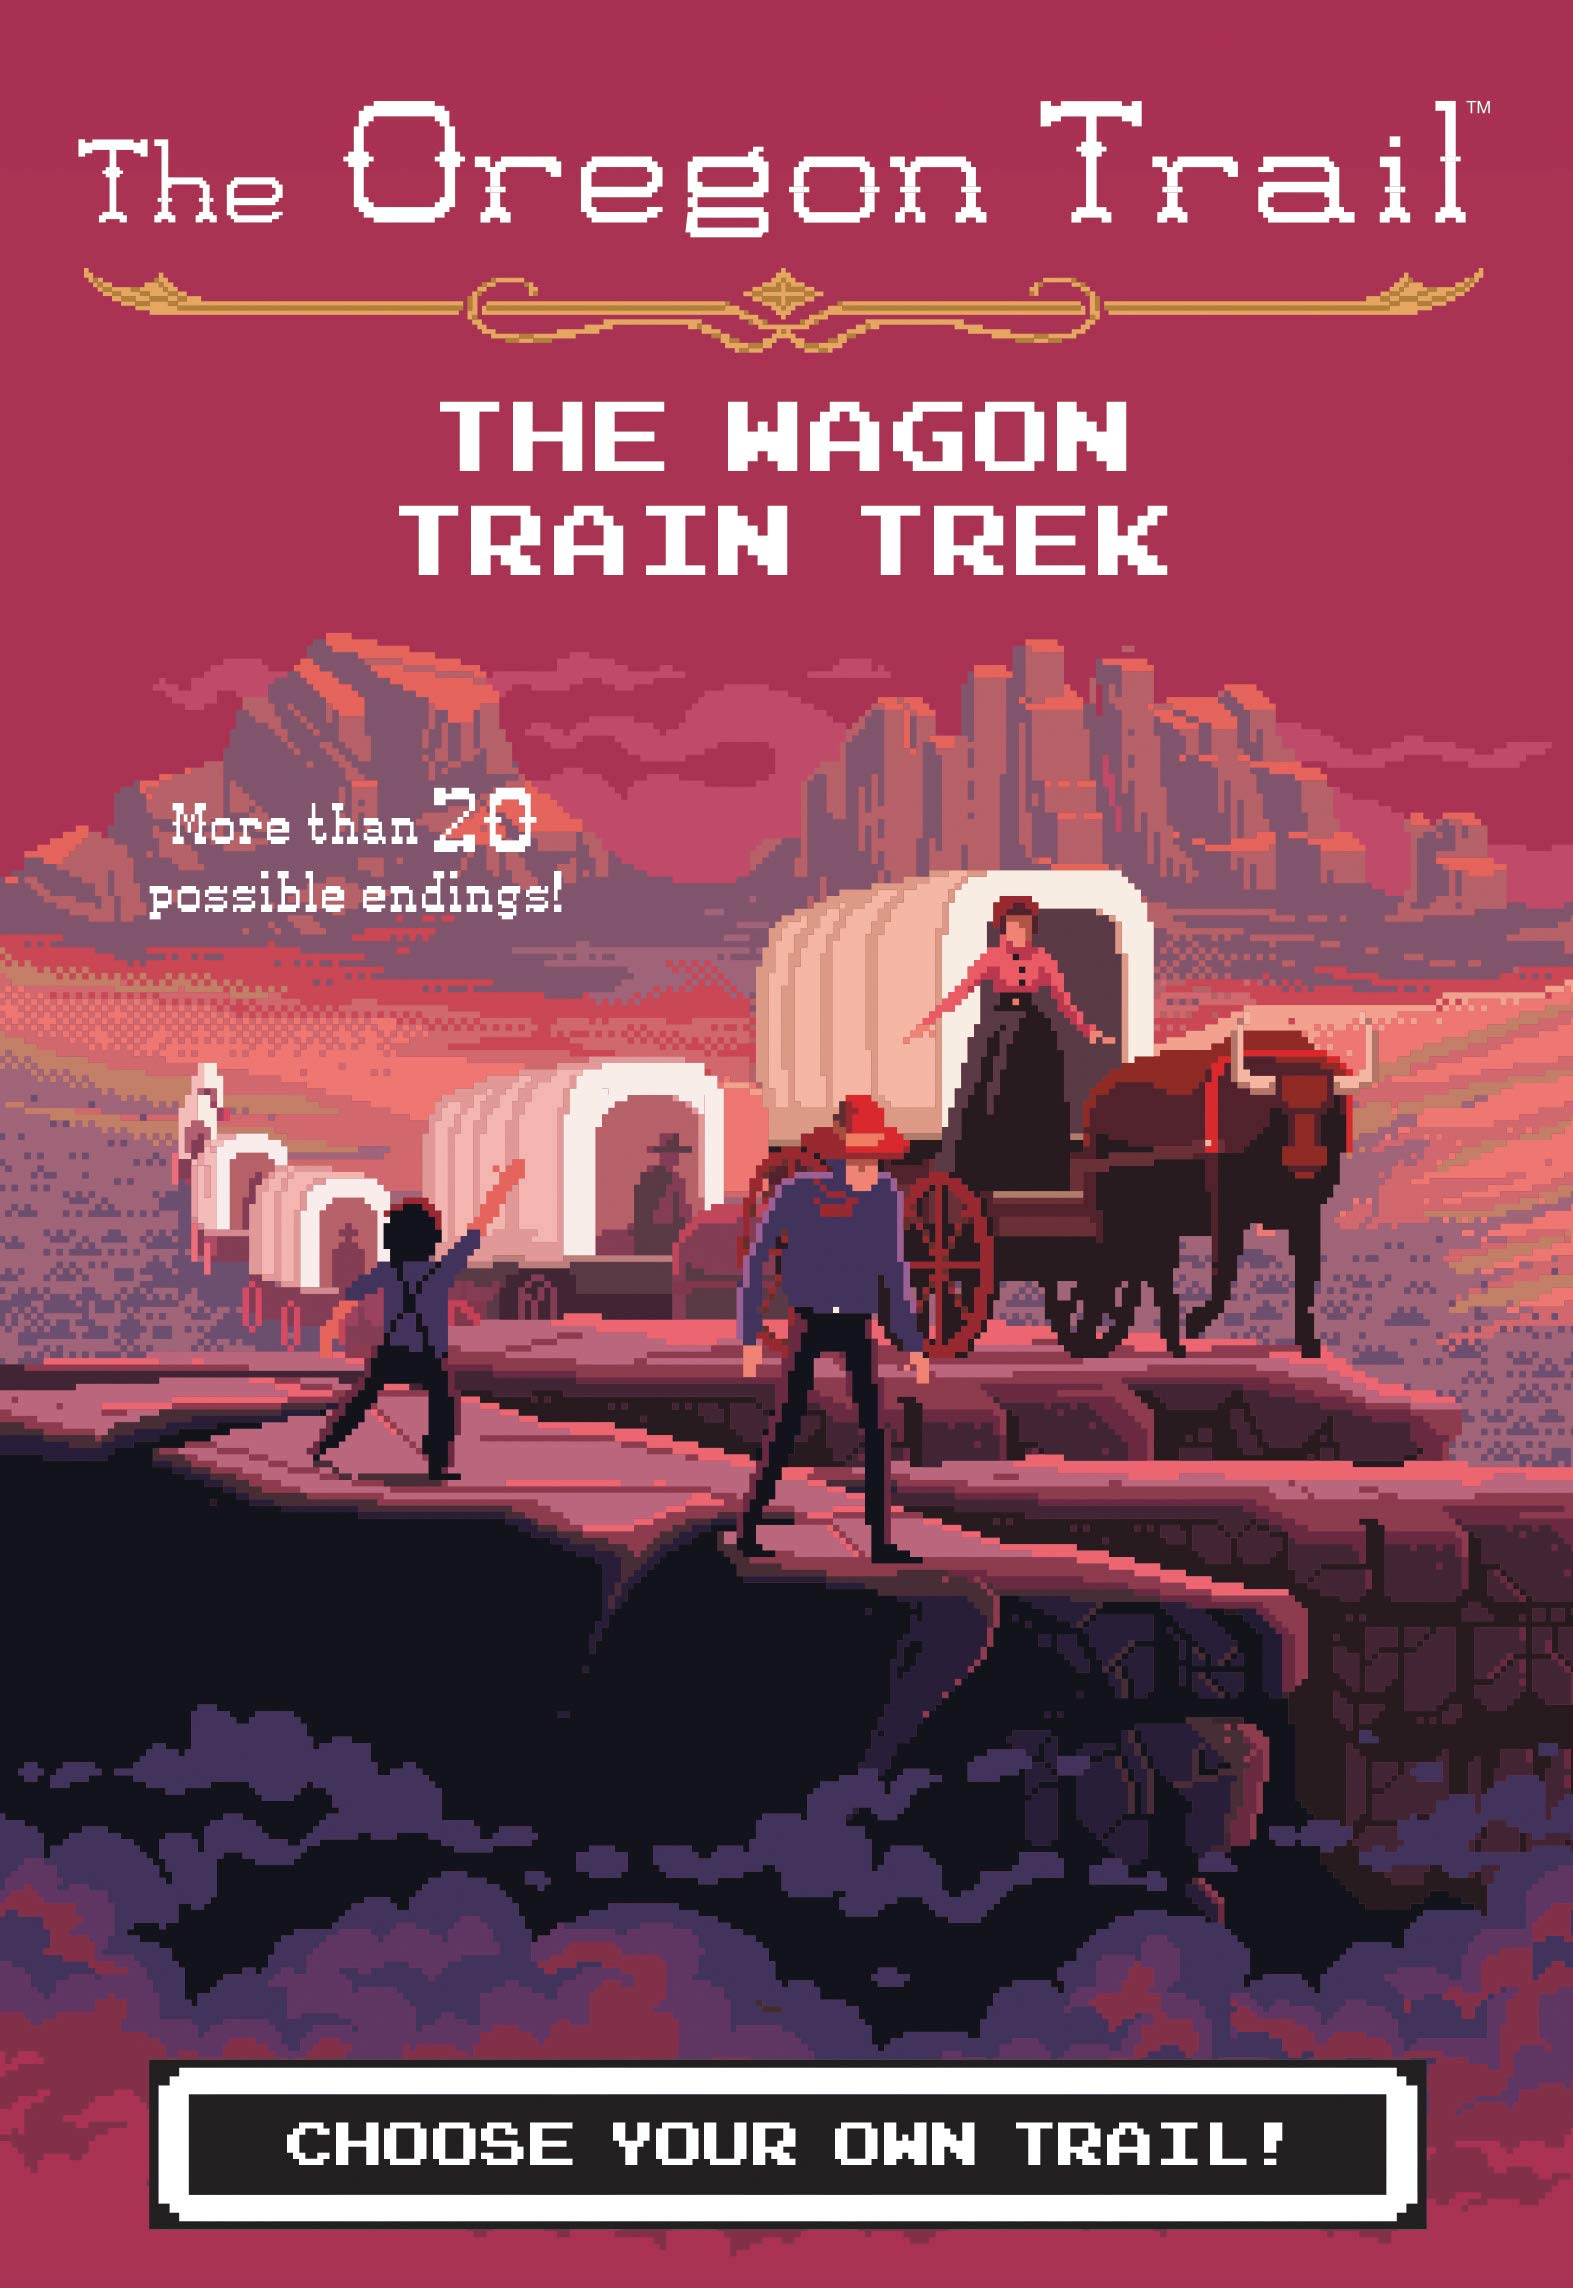 The Wagon Train Trek (The Oregon Trail)